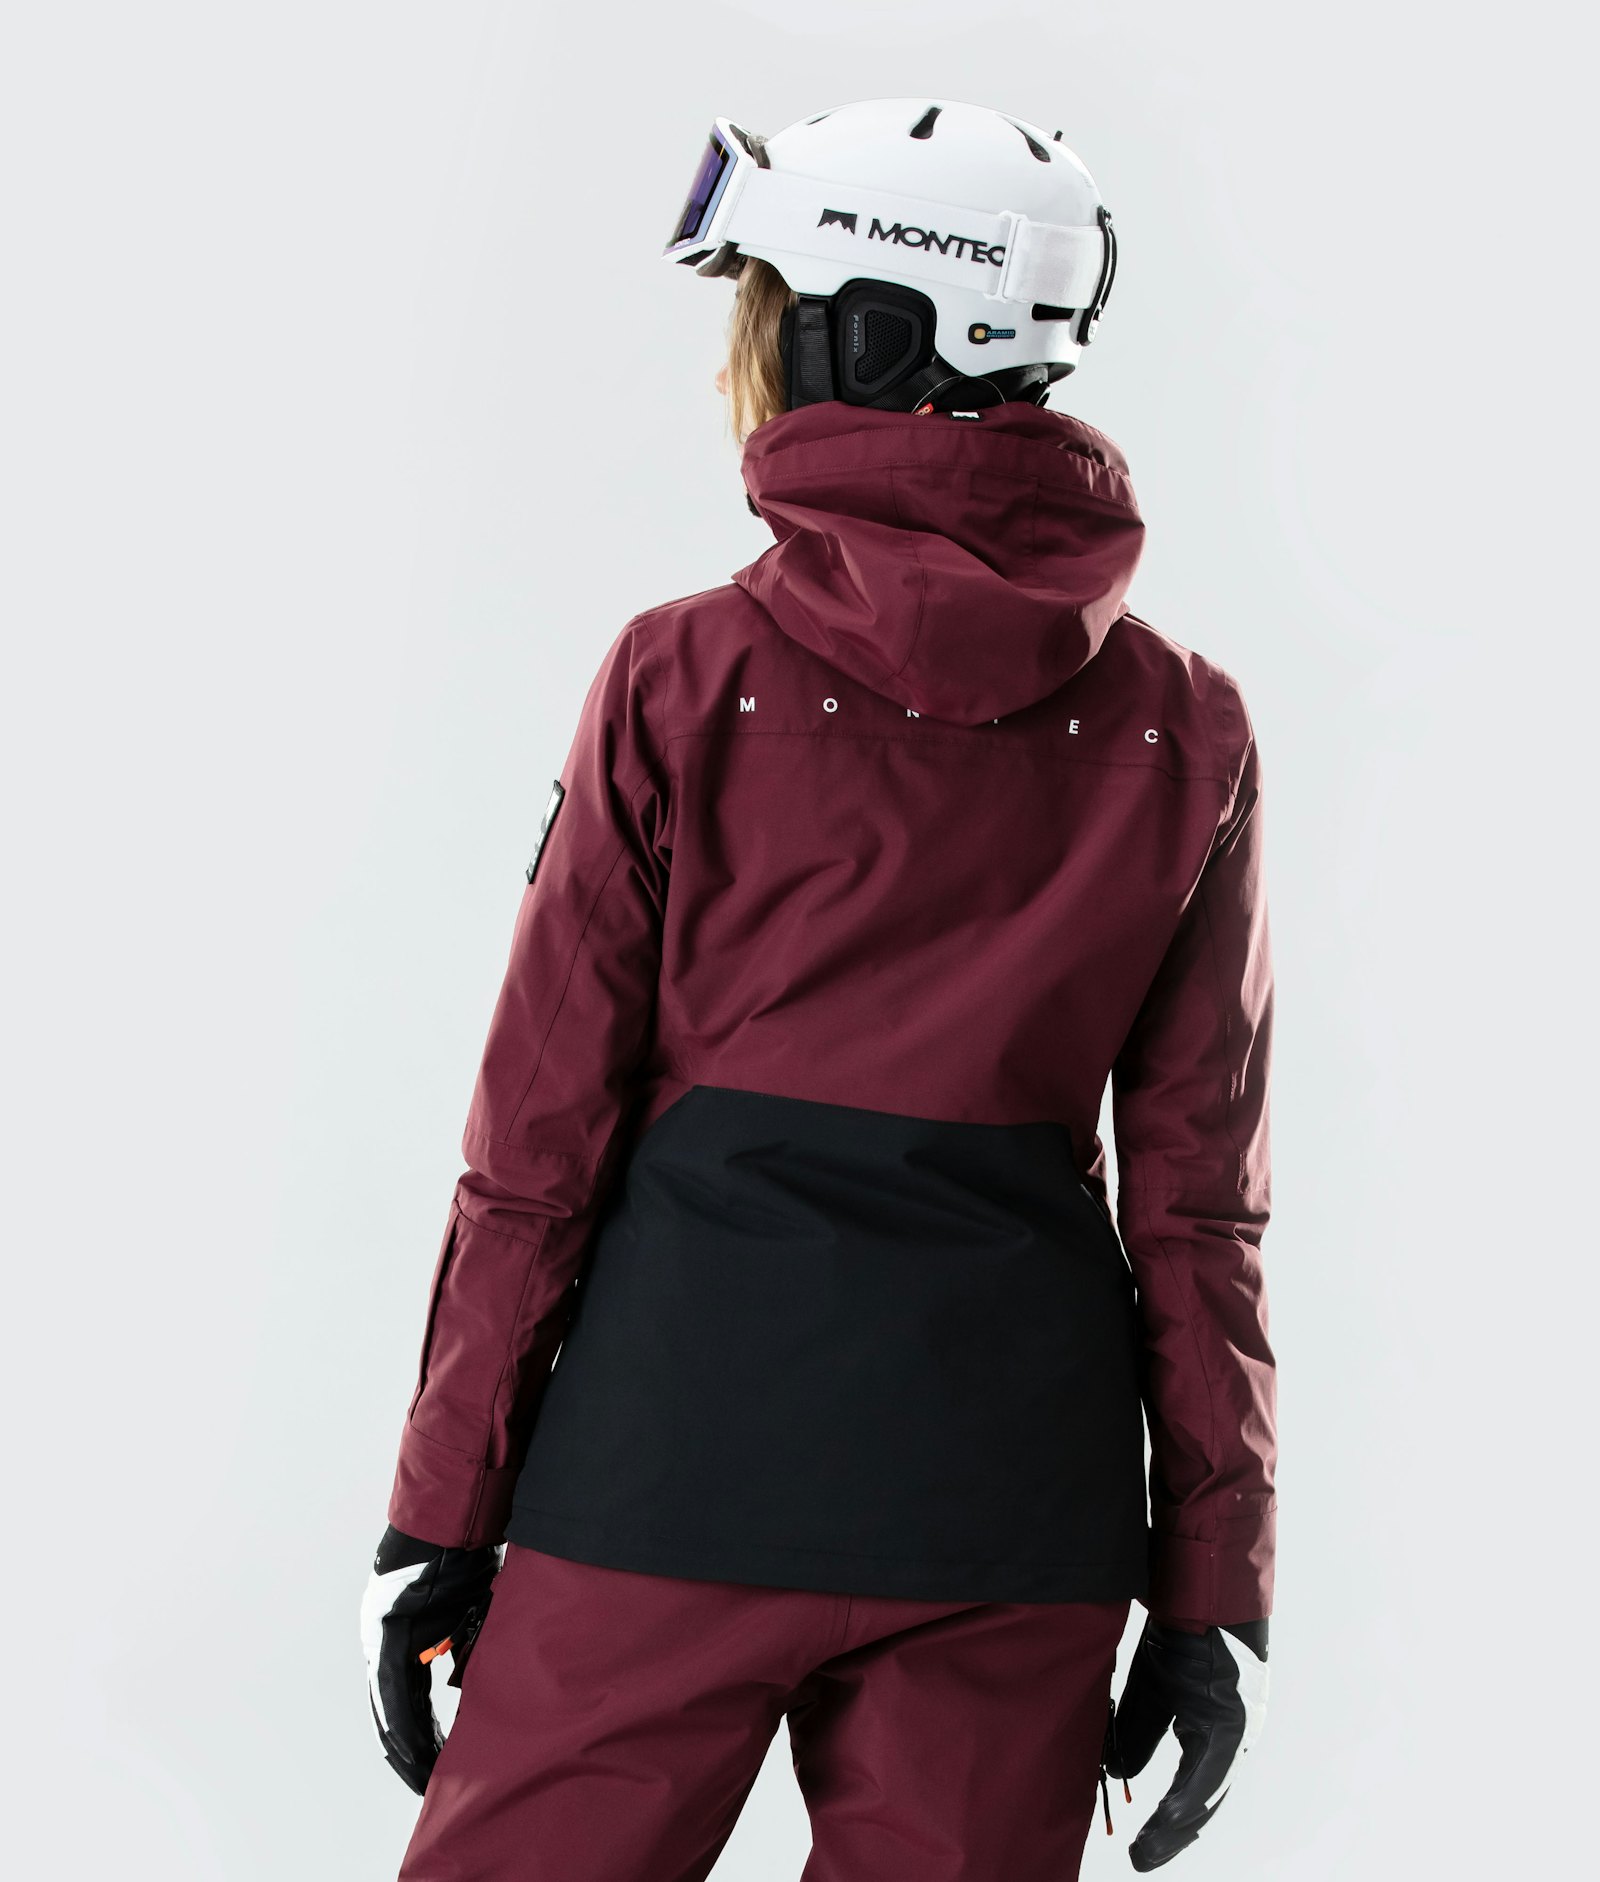 Moss W 2020 Chaqueta Snowboard Mujer Burgundy/Black